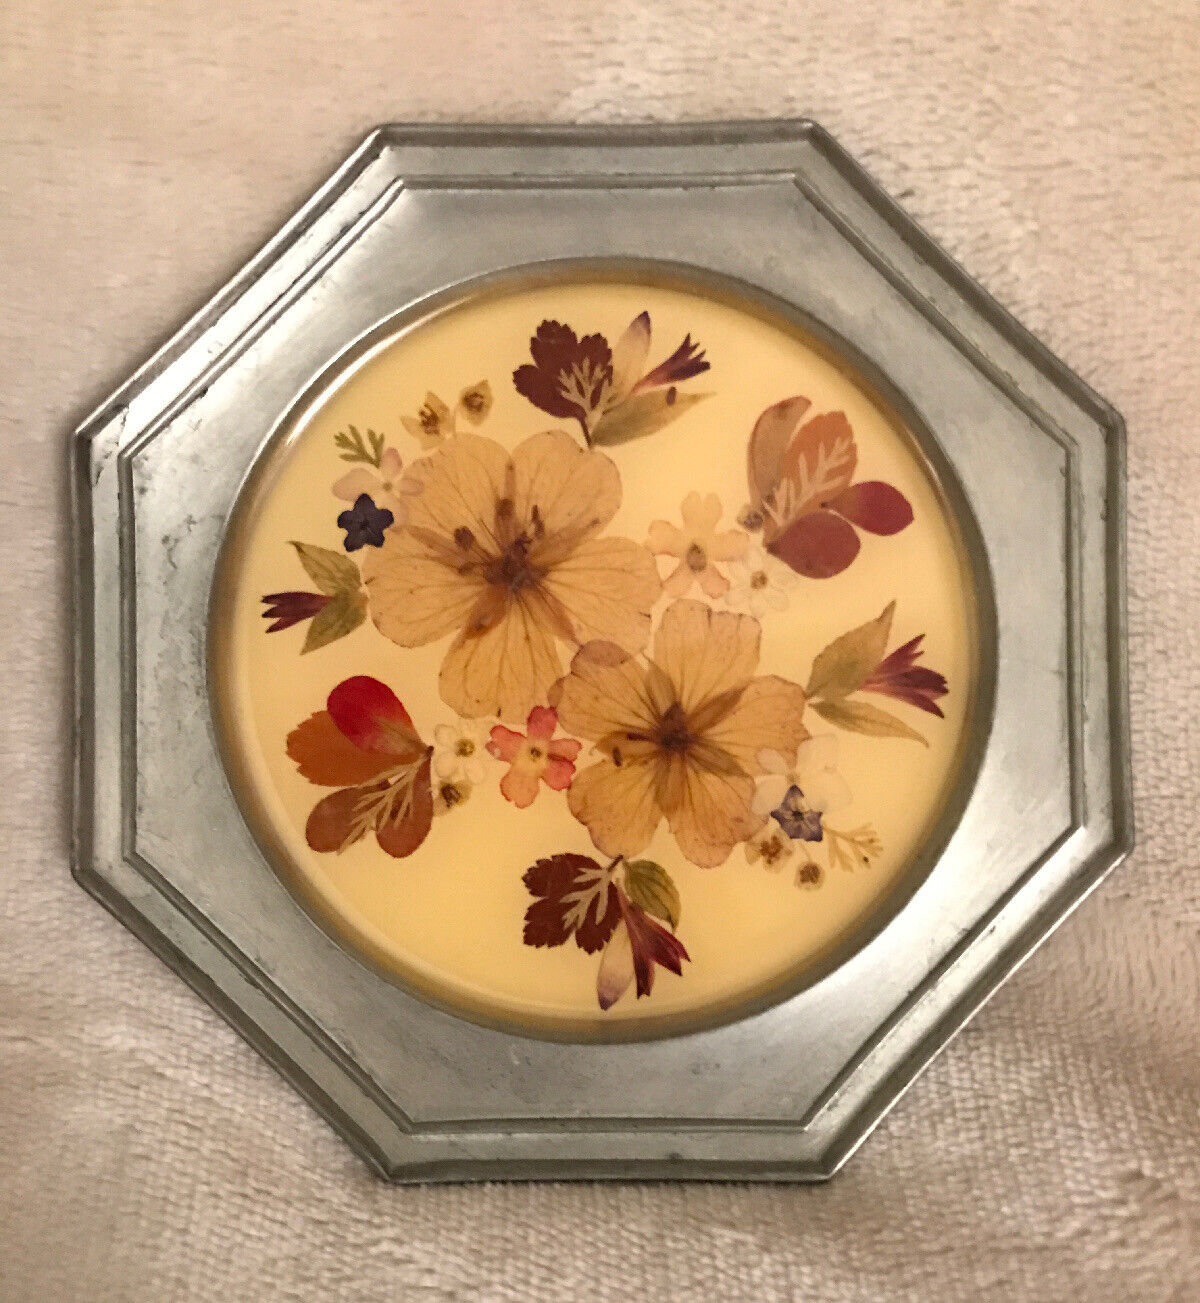 Vintage Rein Zinn Decorative Plate with Real Switzerland Alp Flowers